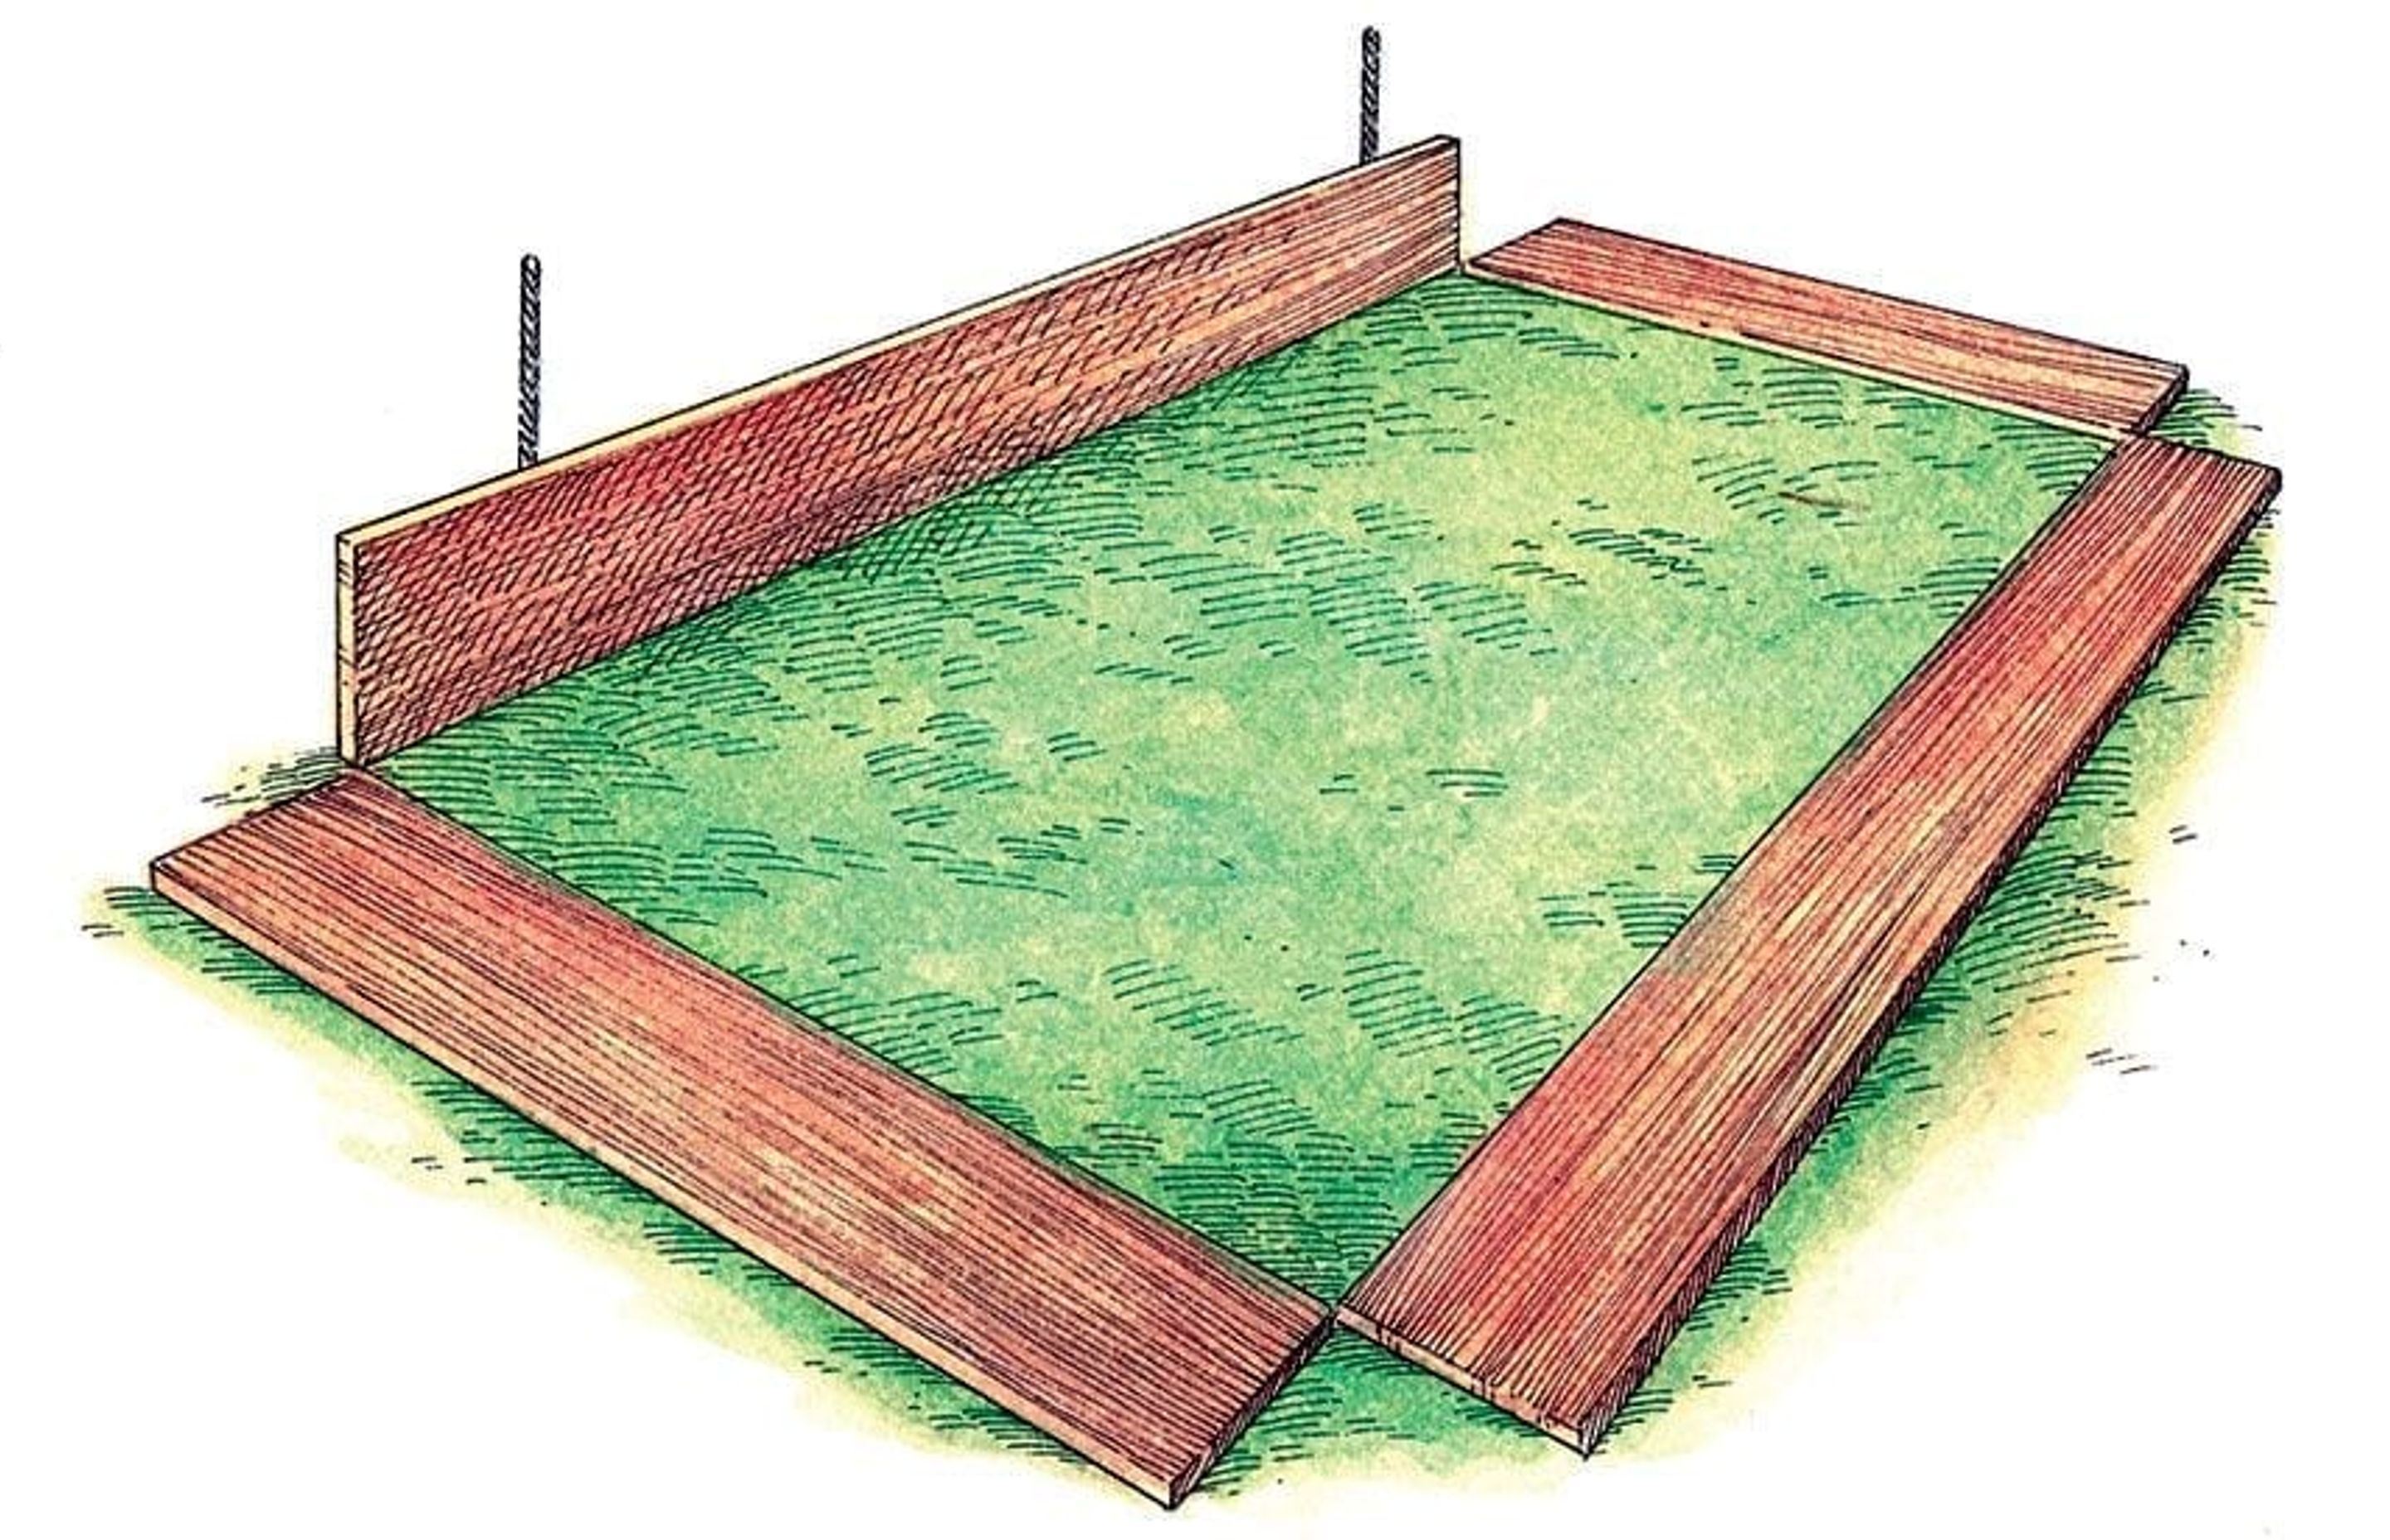 Weekend Series – Build a Simple Raised Garden Bed